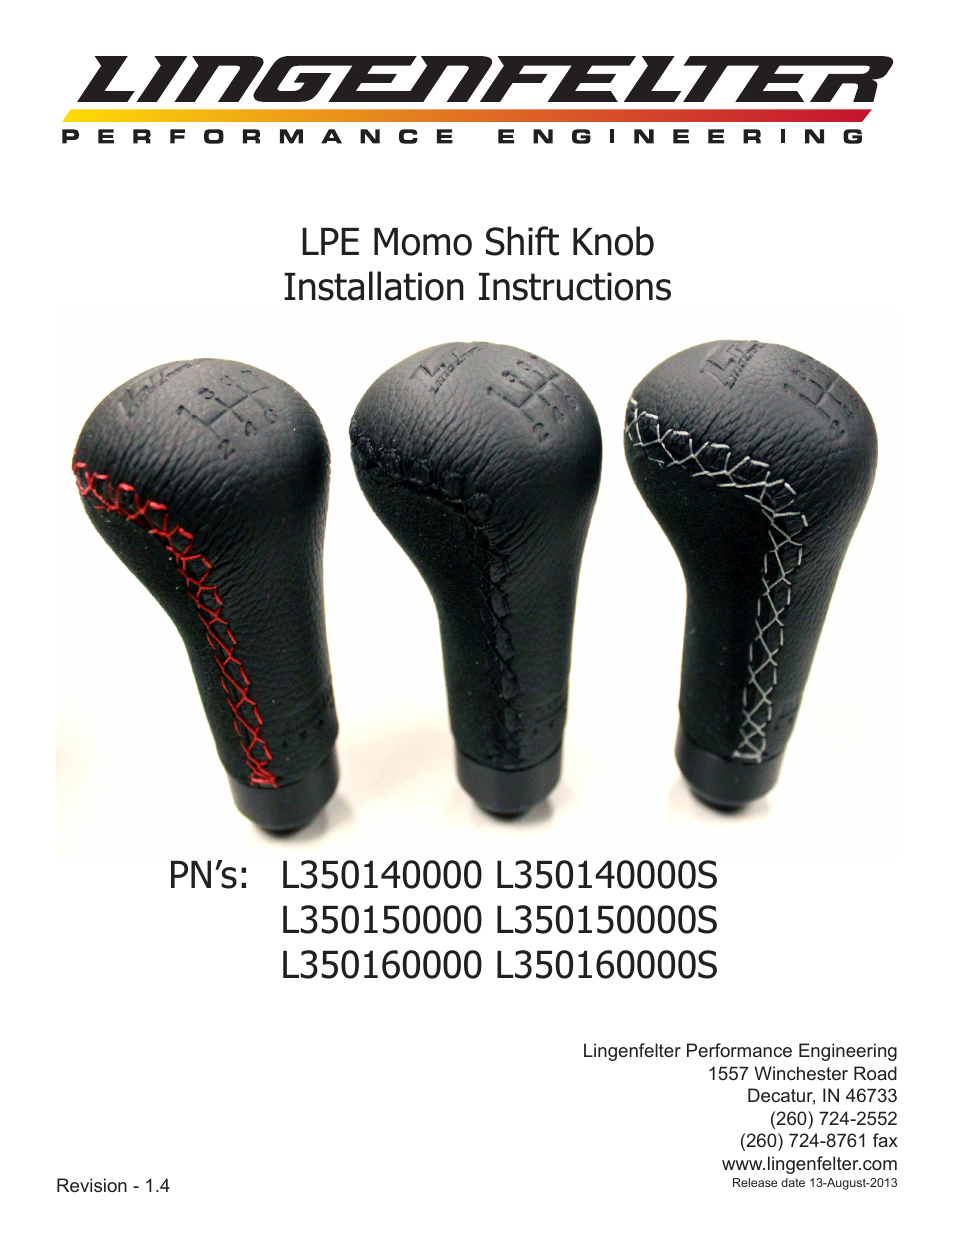 L350xx0000 Lingenfelter Momo Shift Knob v1.4